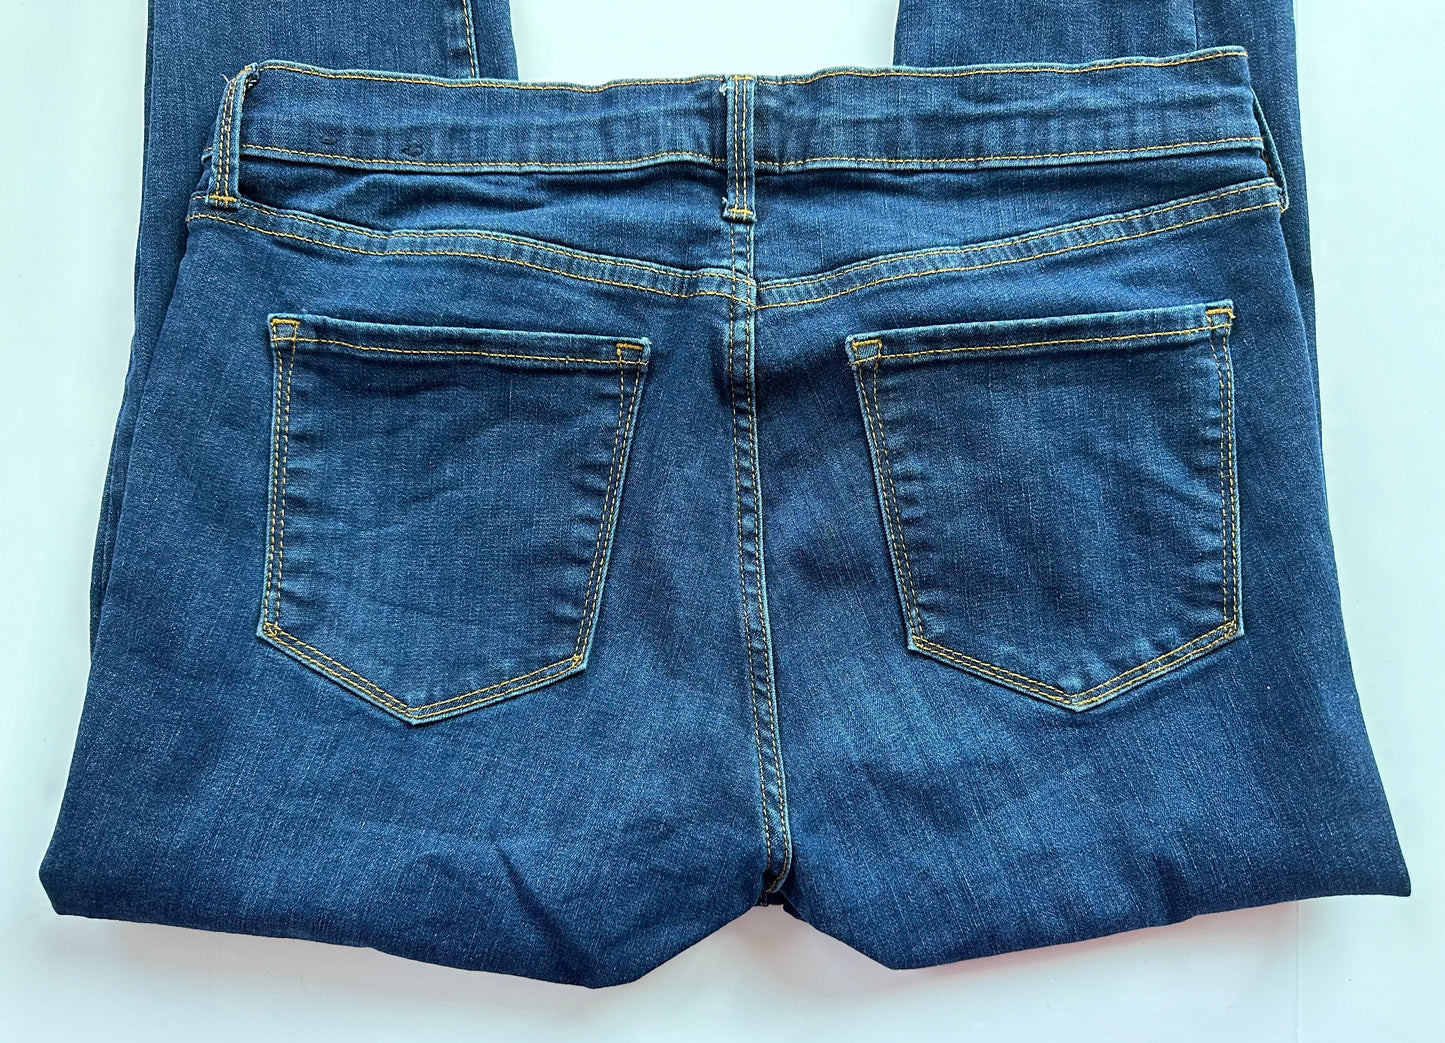 Women’s Gap - Gap for GOOD - 10/30 Regular True Skinny jeans, dark indigo wash